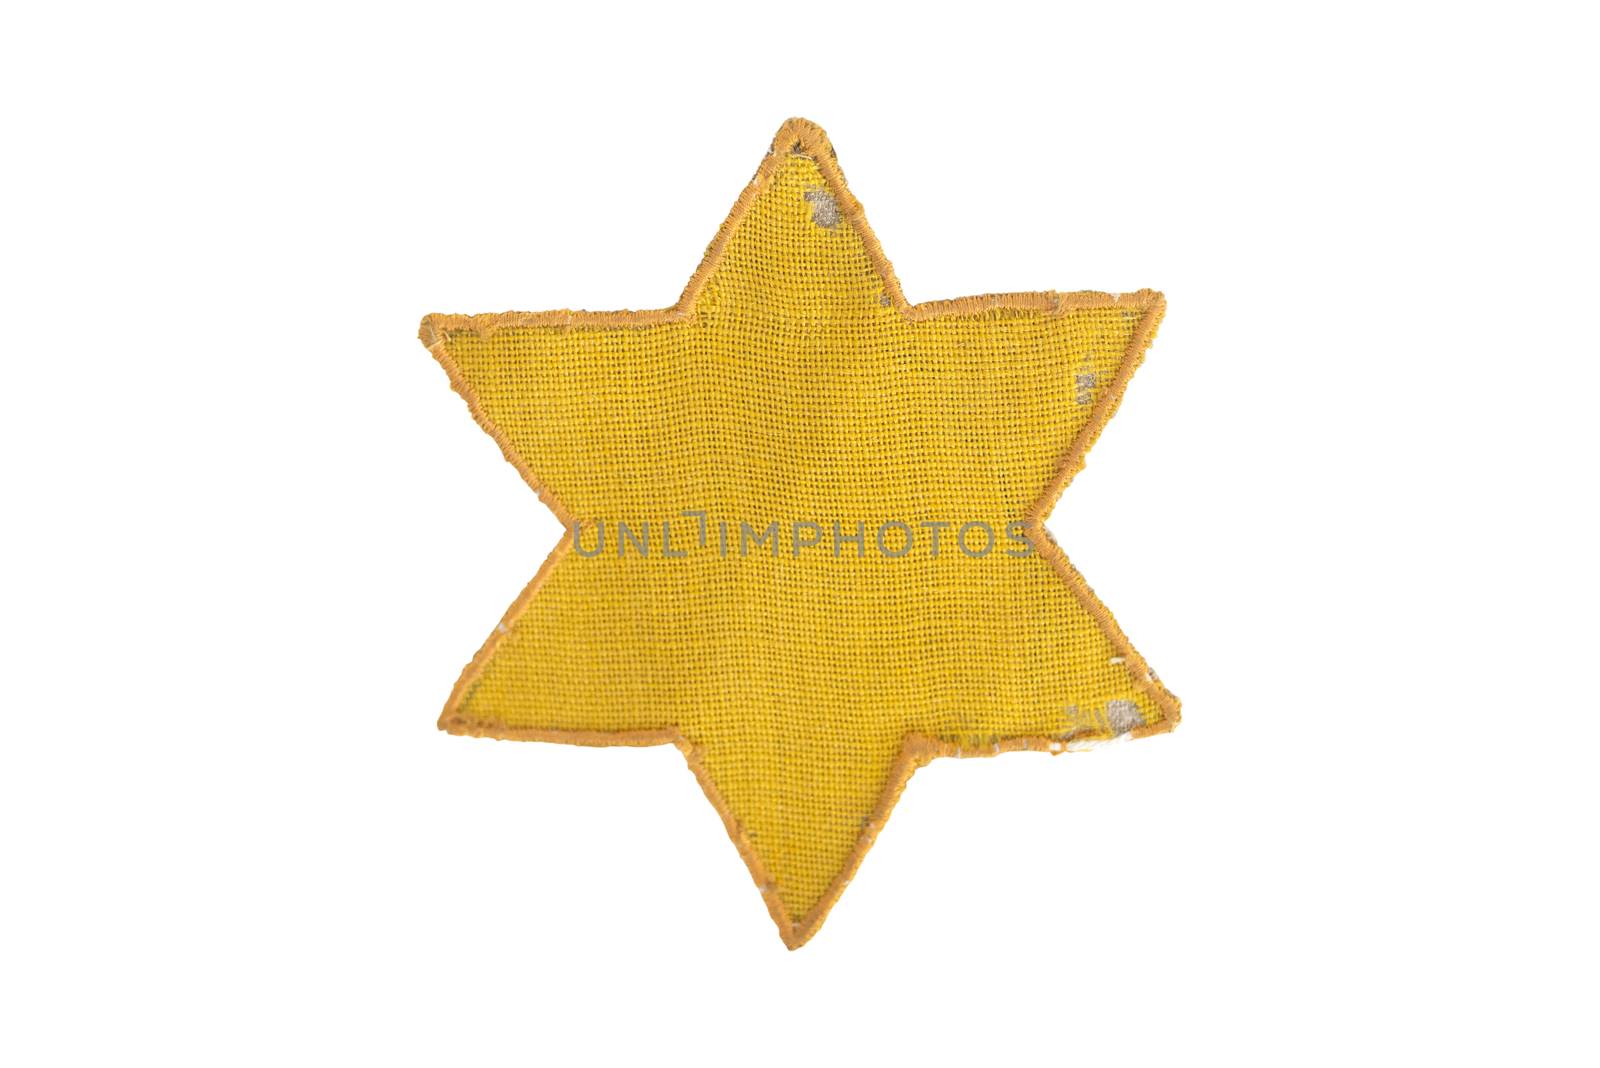 Yellow Star Of David real world war relic